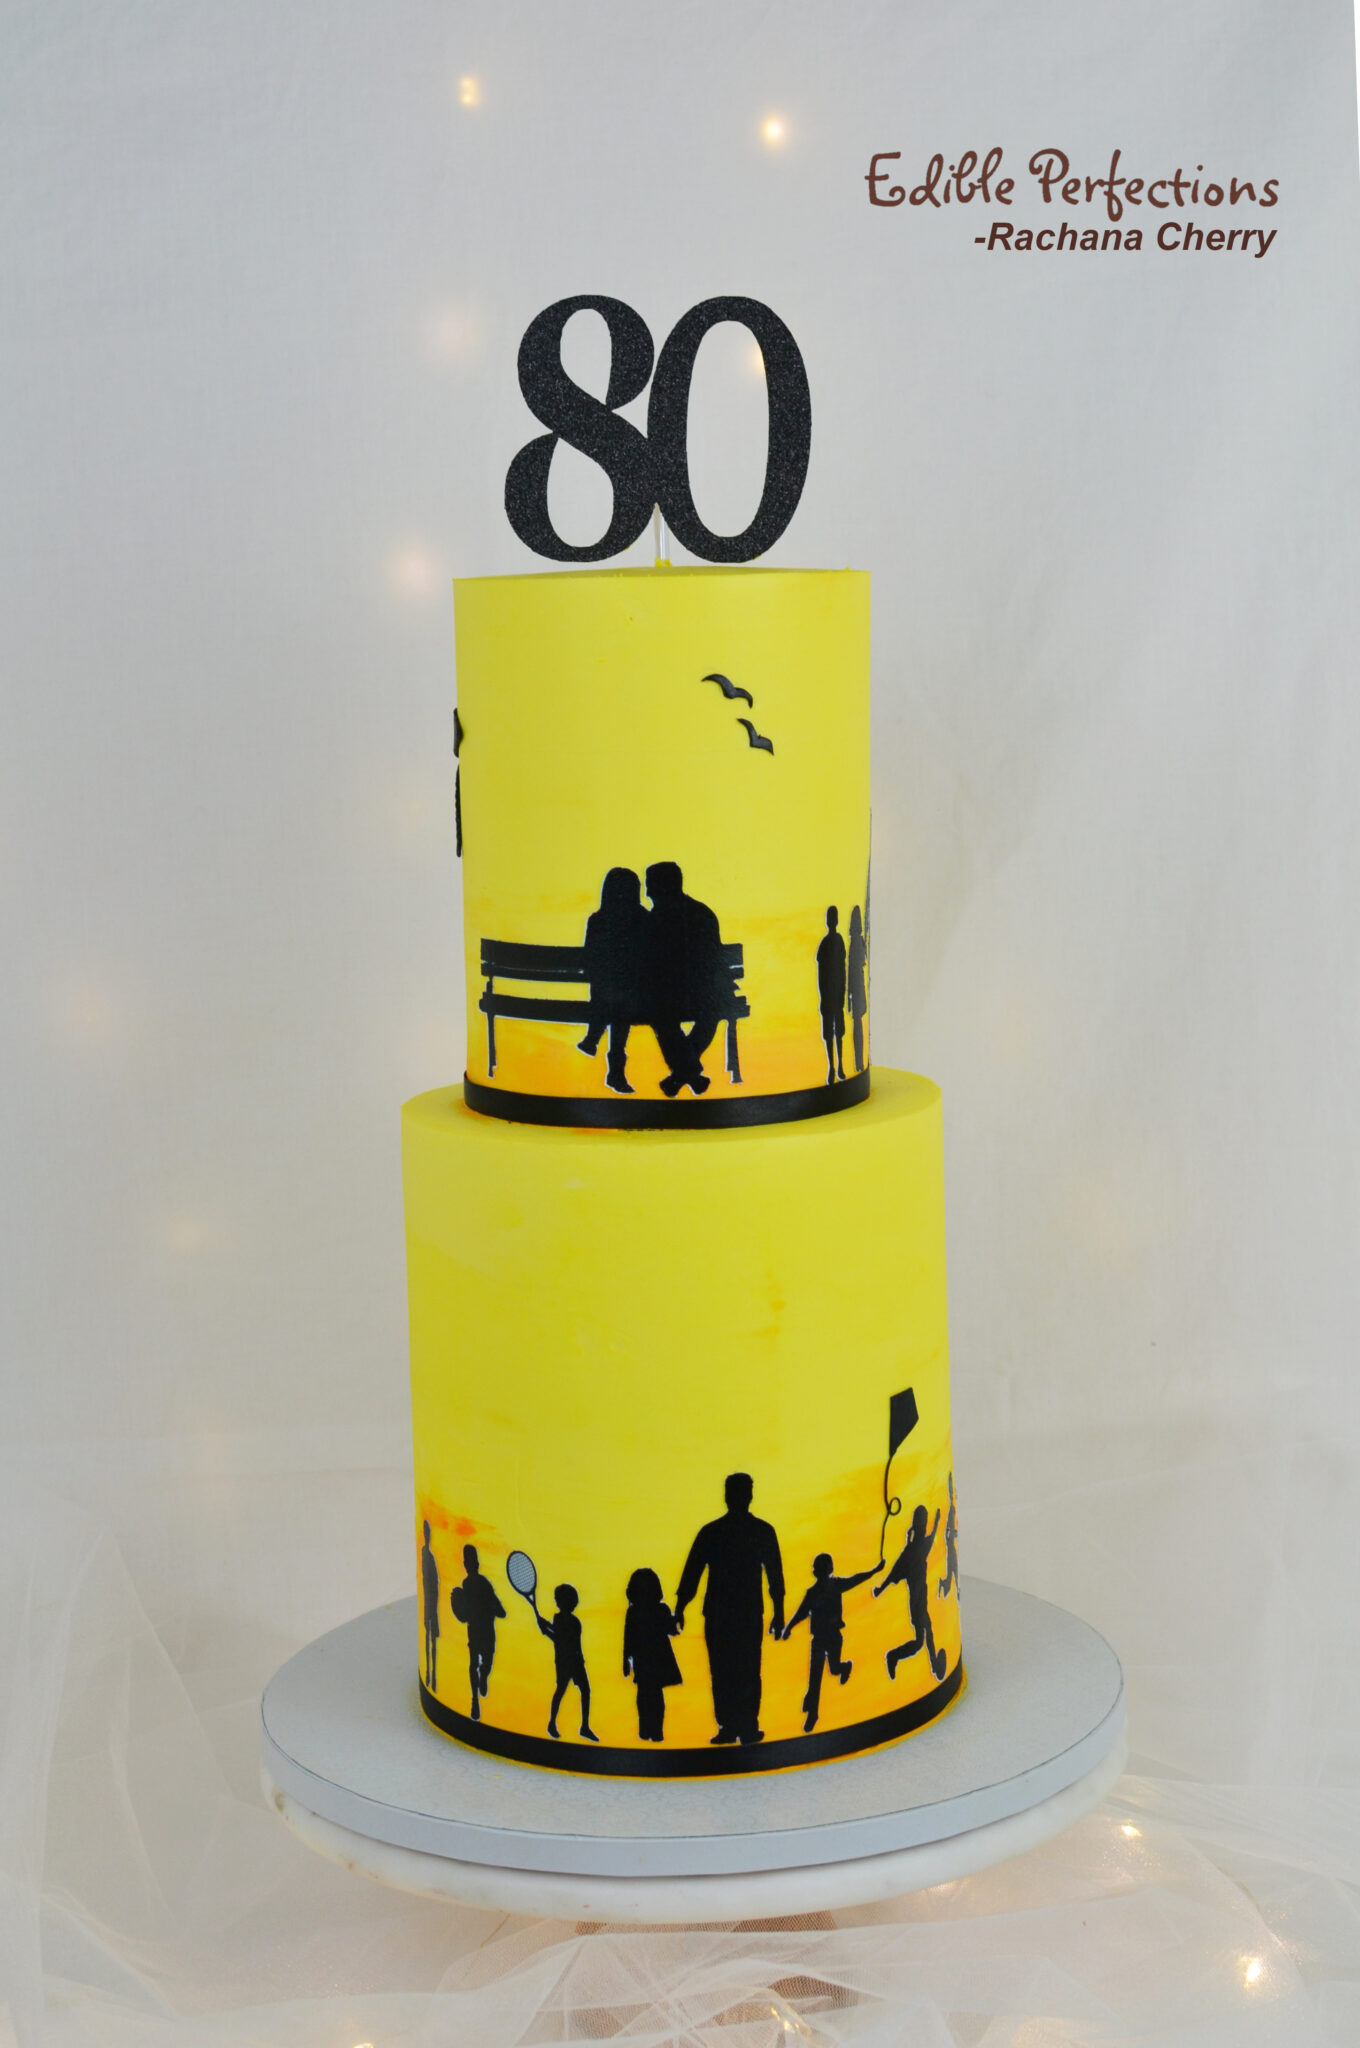 80th-birthday-cake-edible-perfections